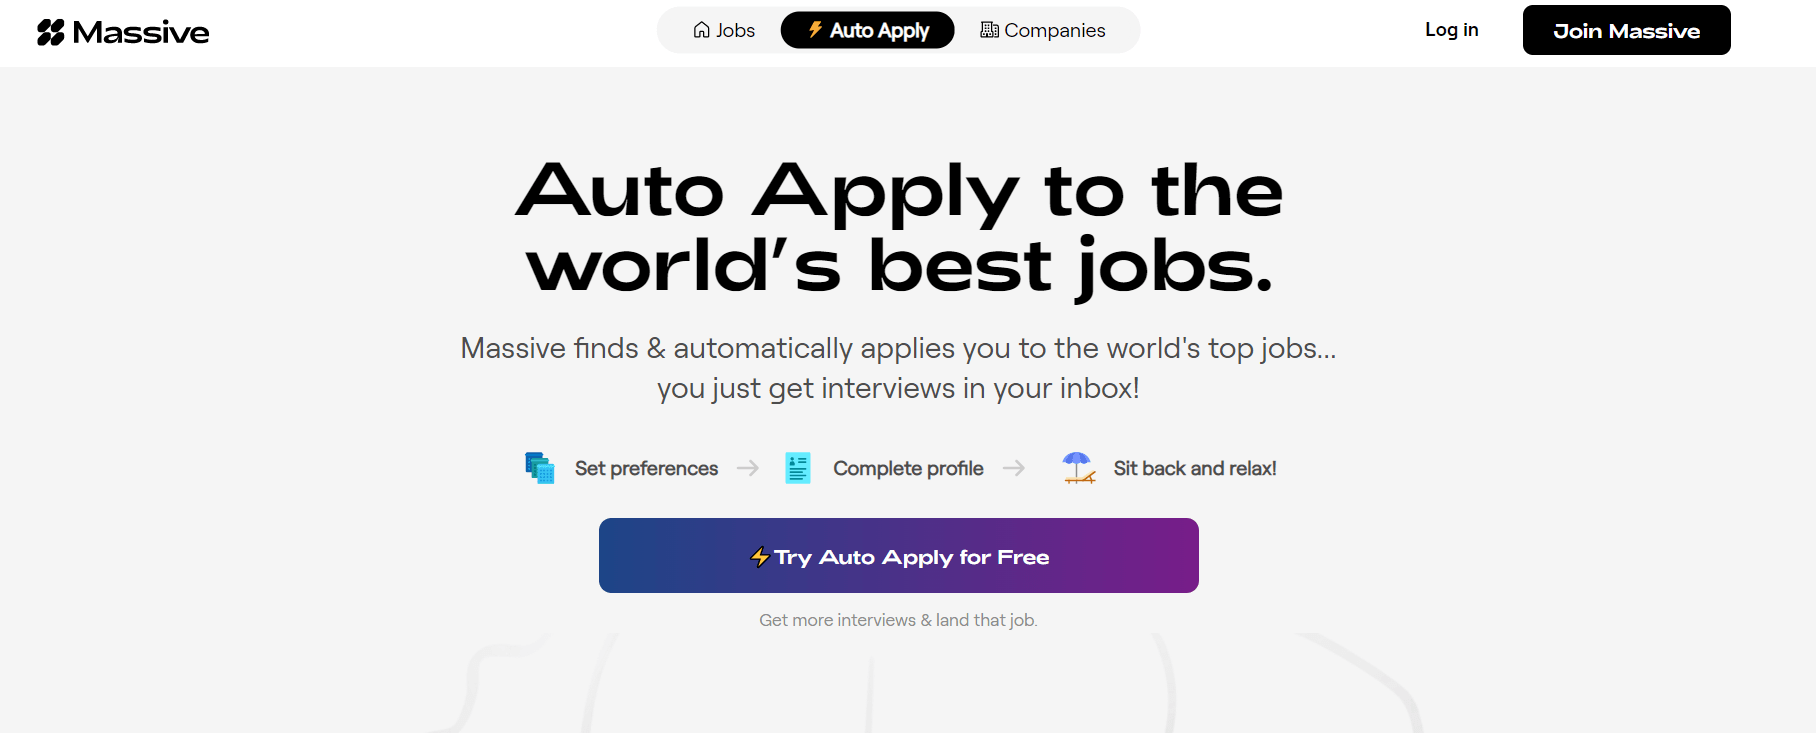 Auto Apply